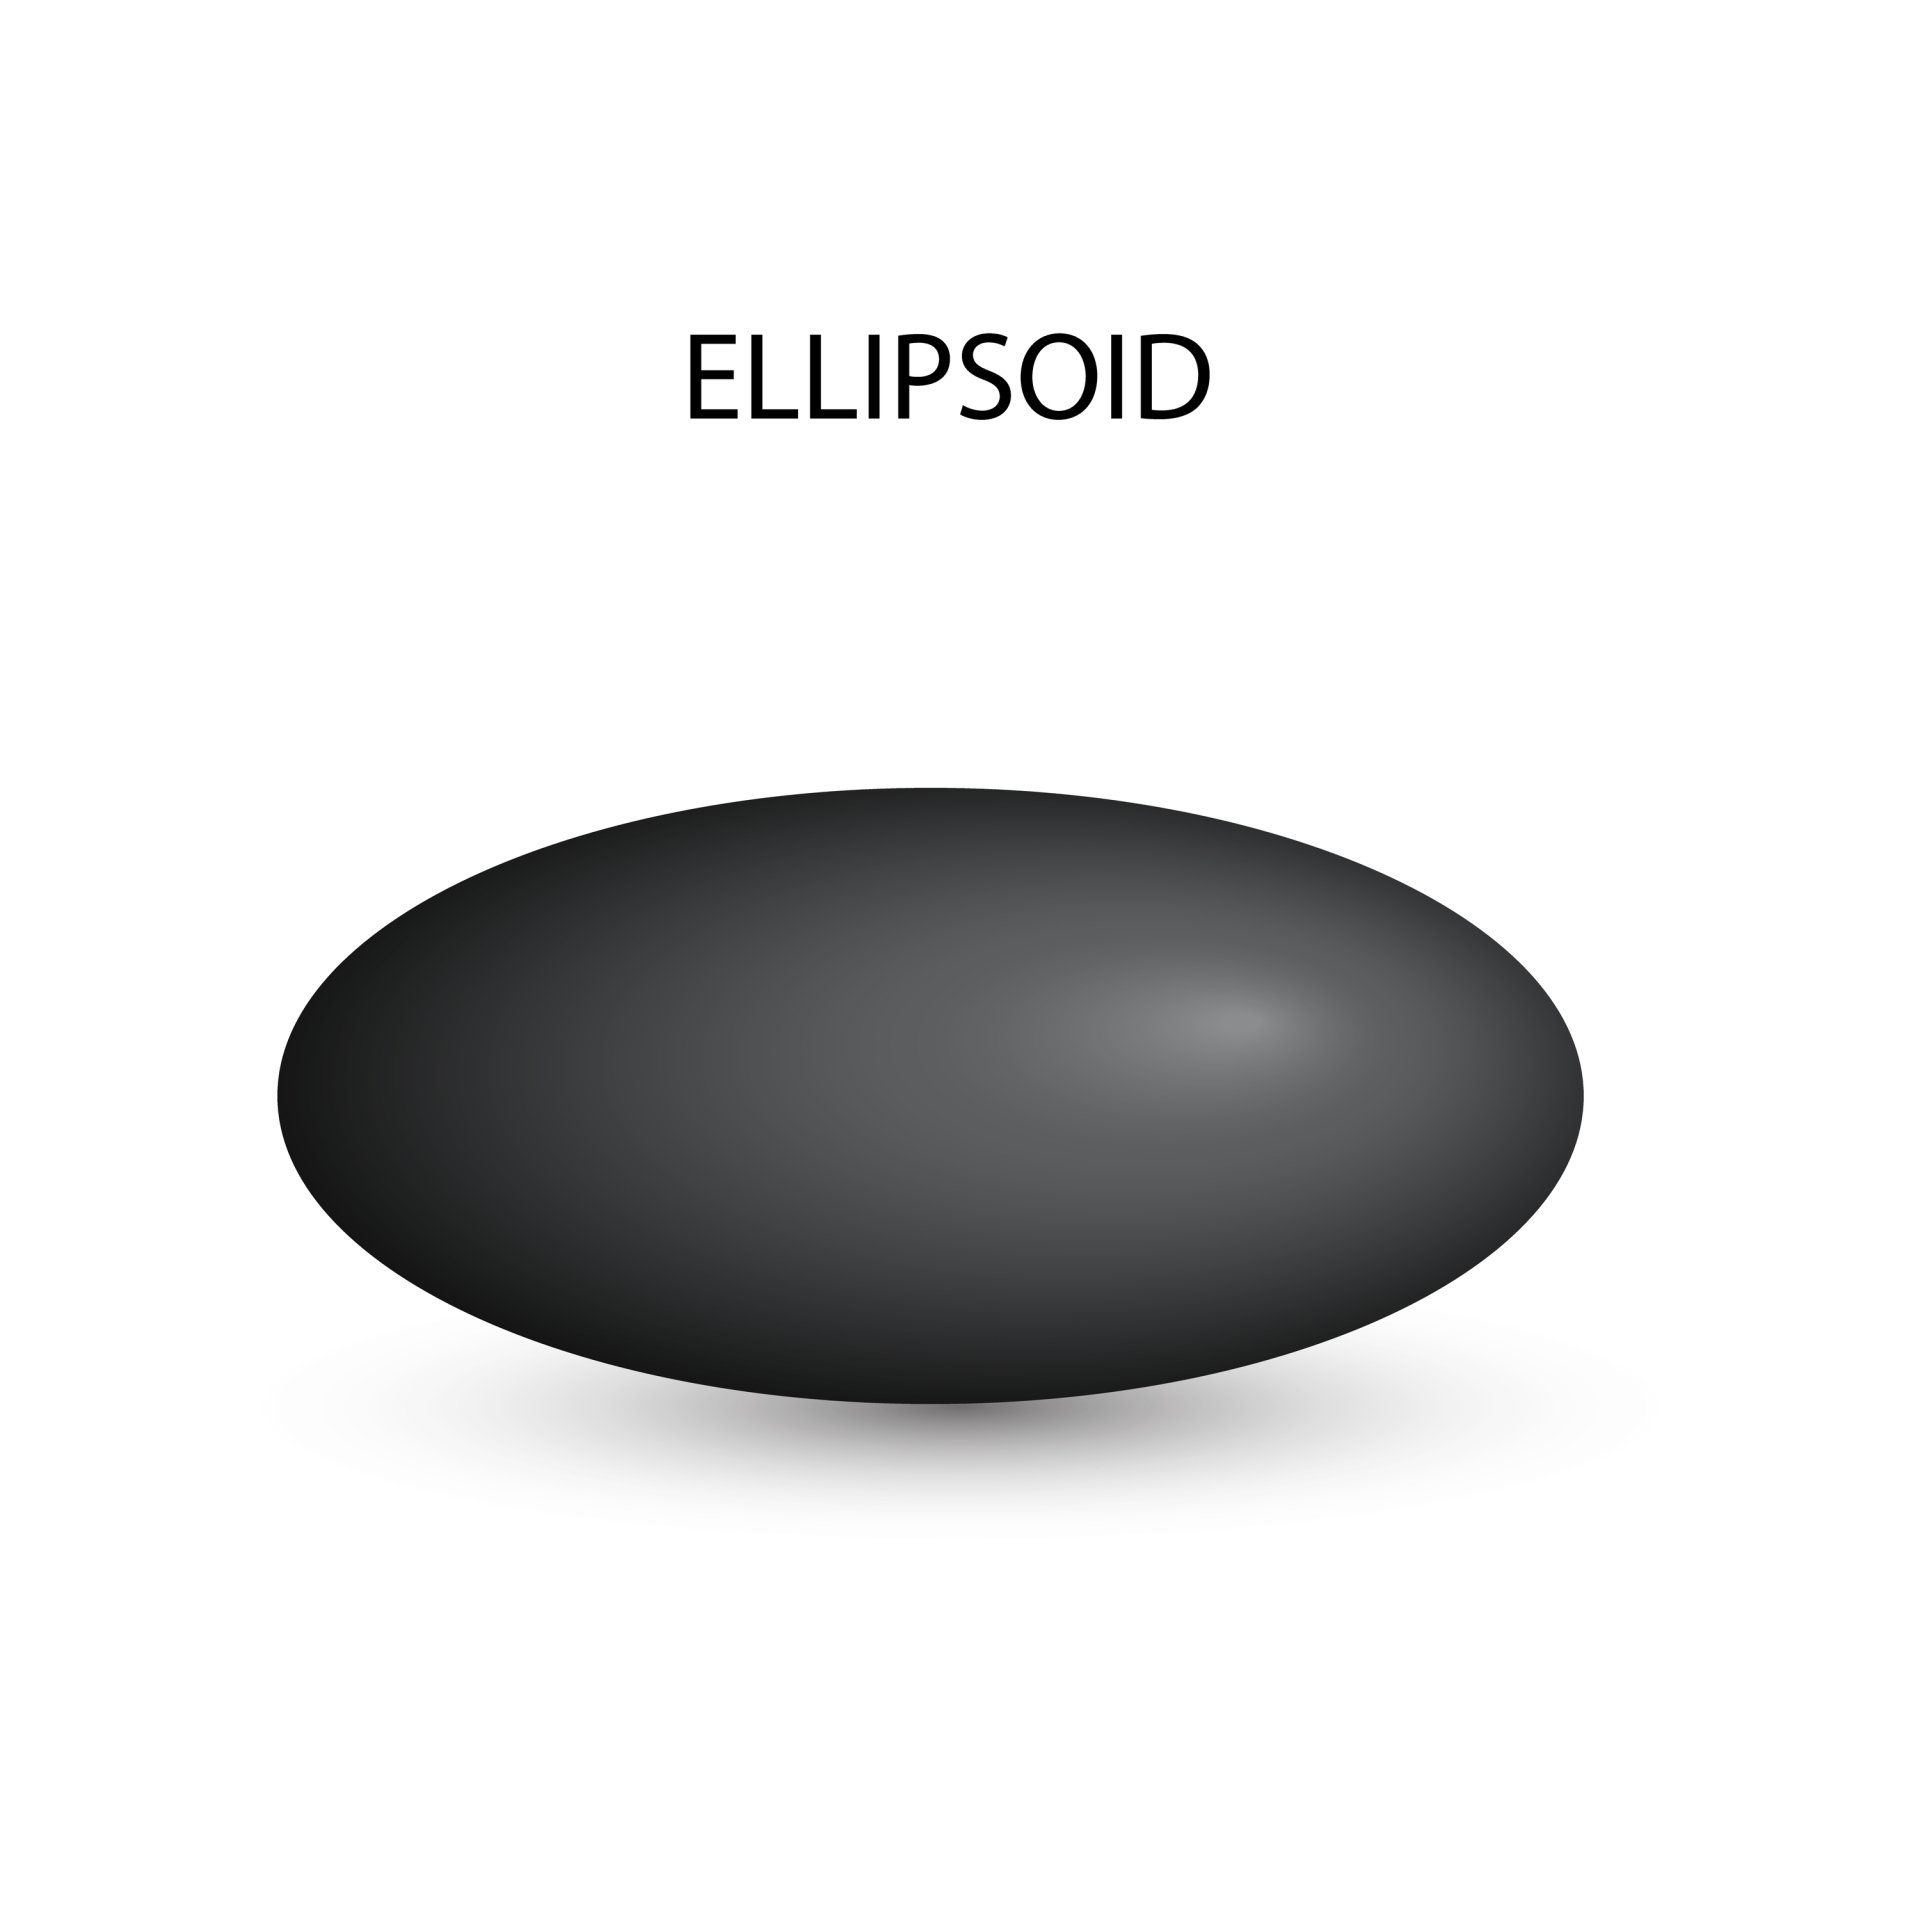 Photograph of a black Ellipsoid diagram